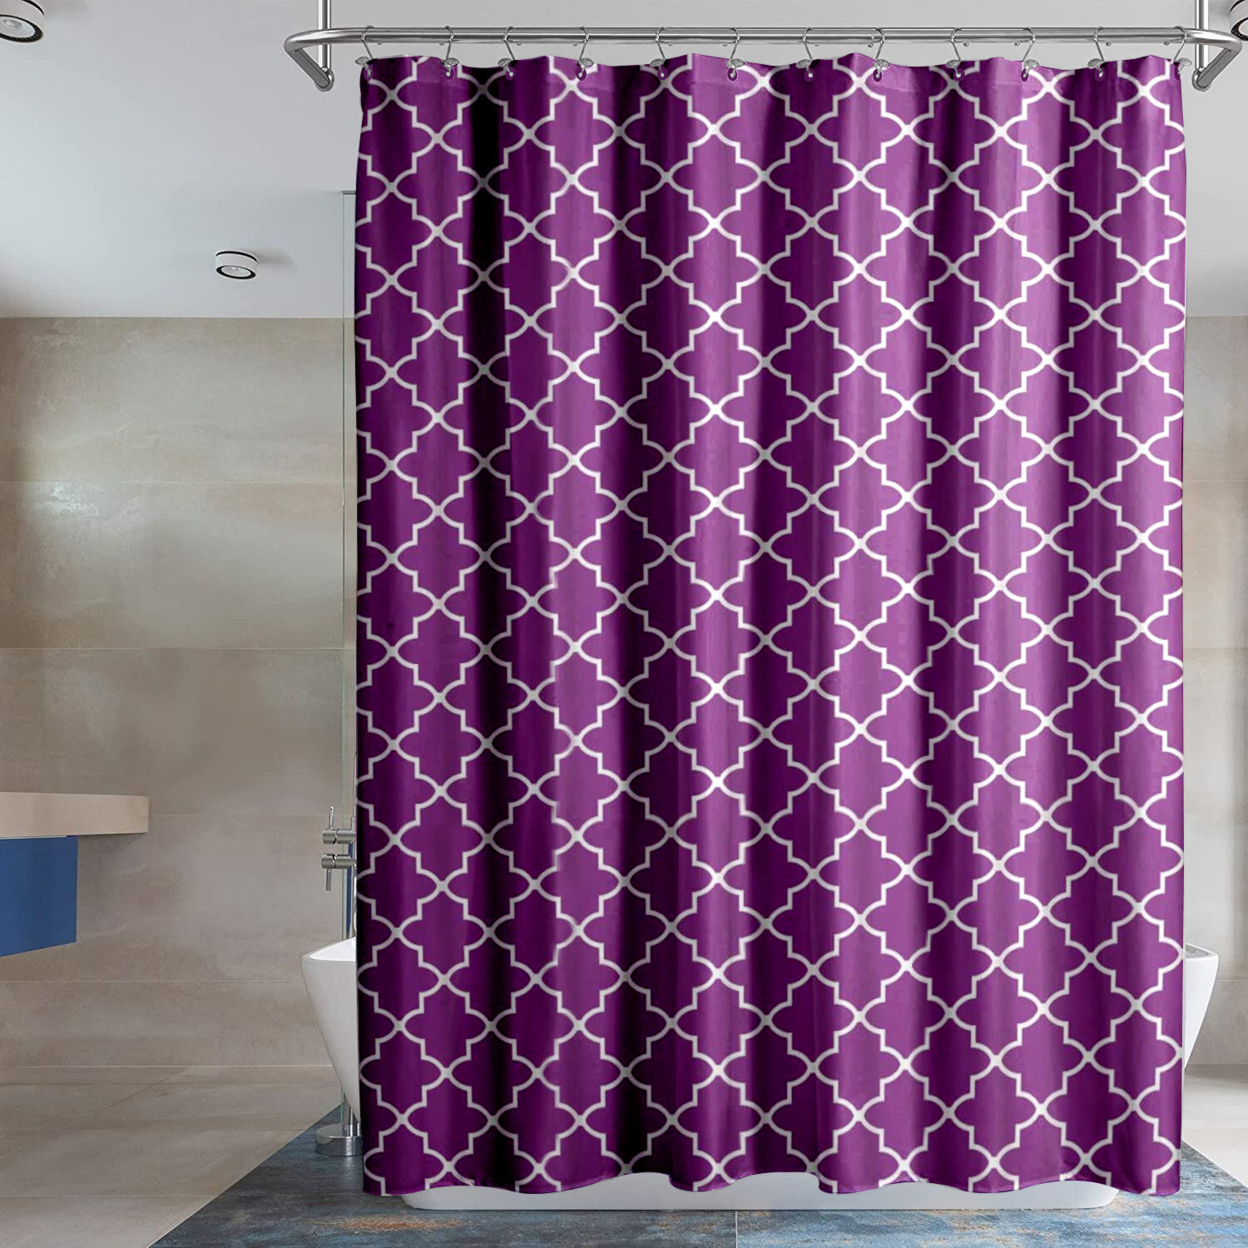 Water-Proof Printed Peva Shower Curtain - 2-Pack, Print